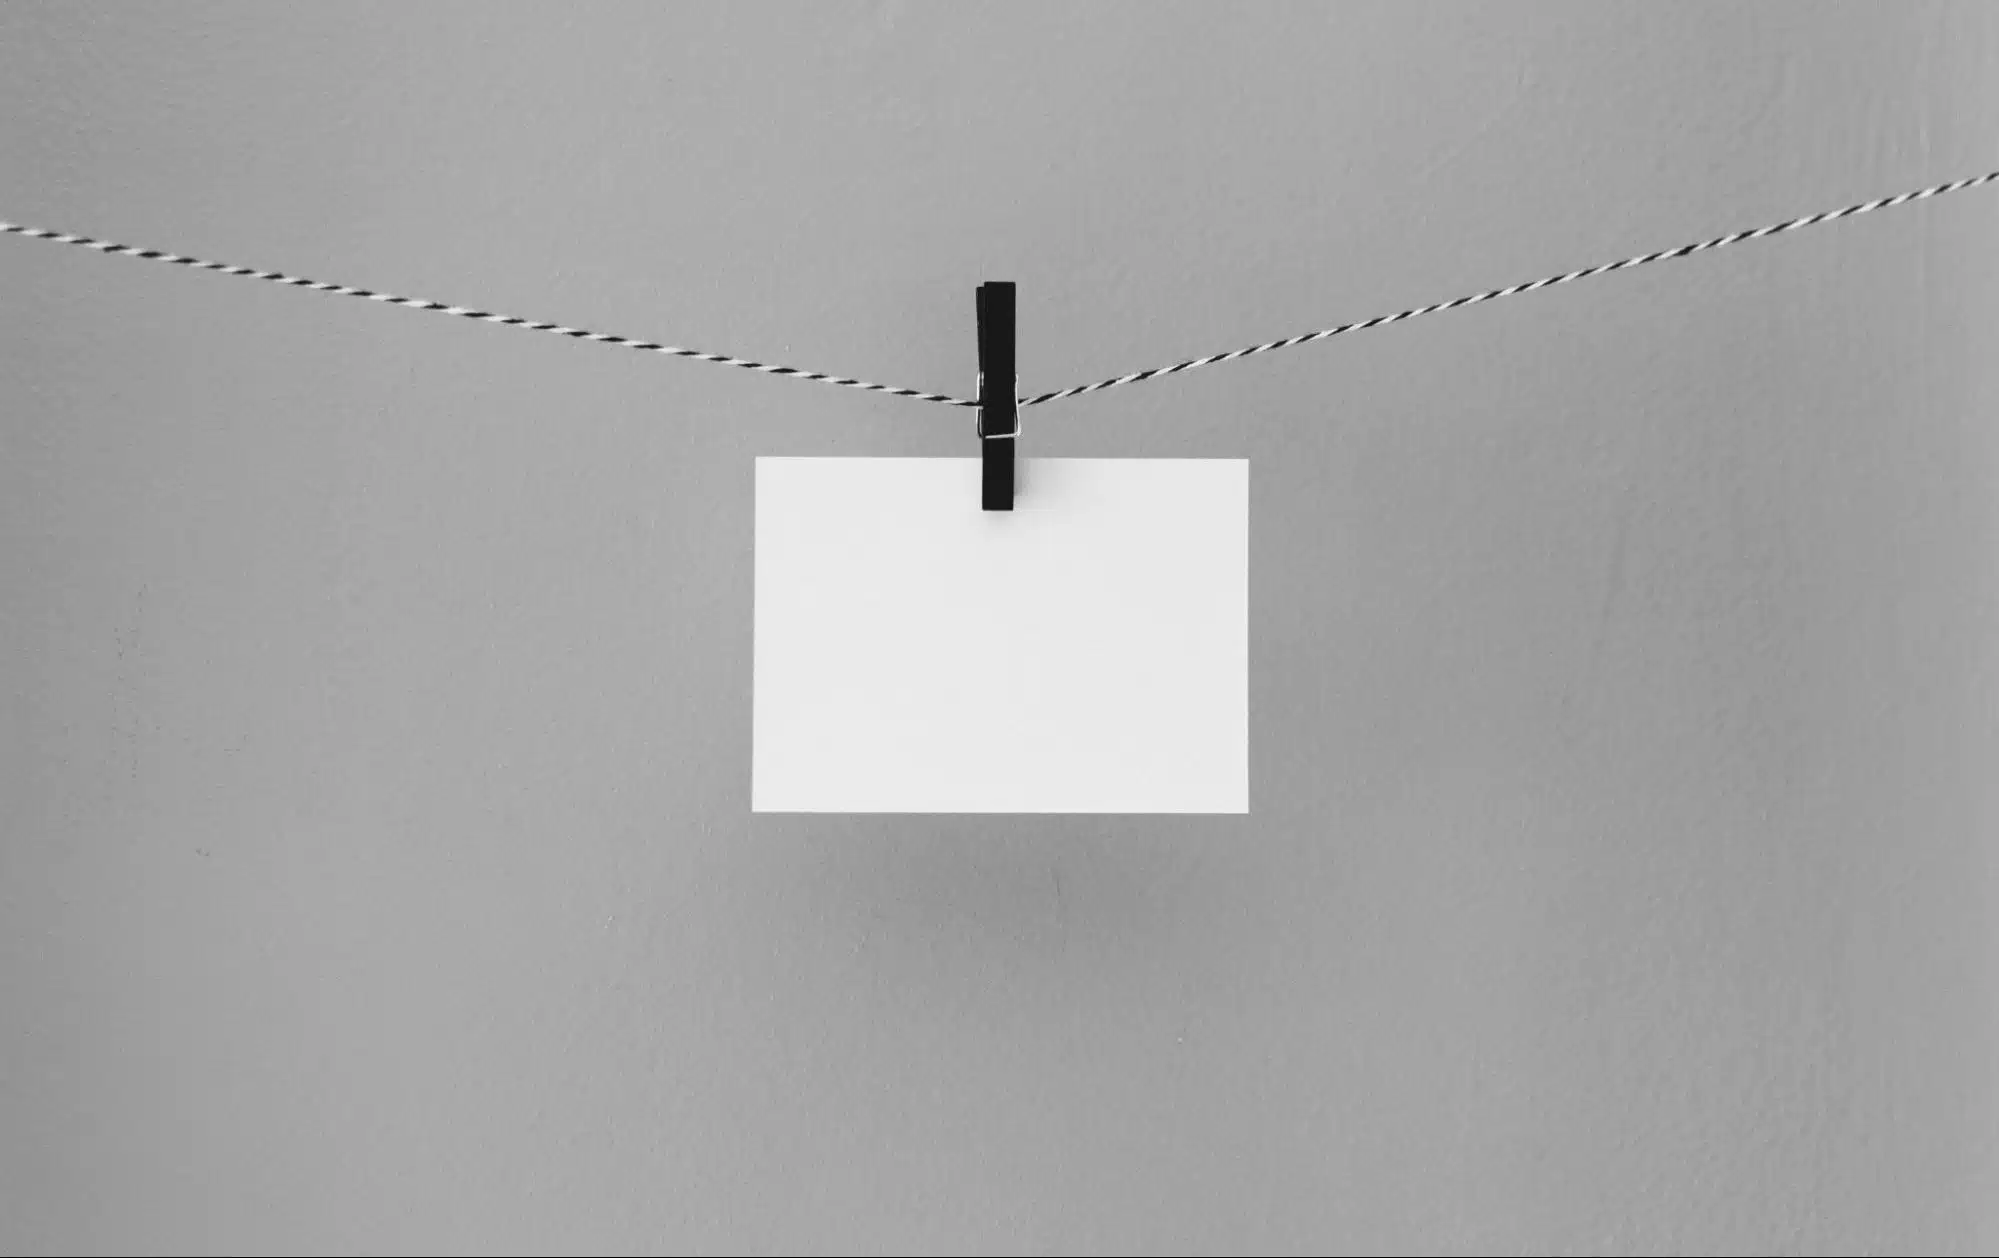 White card hanging from horizontal string